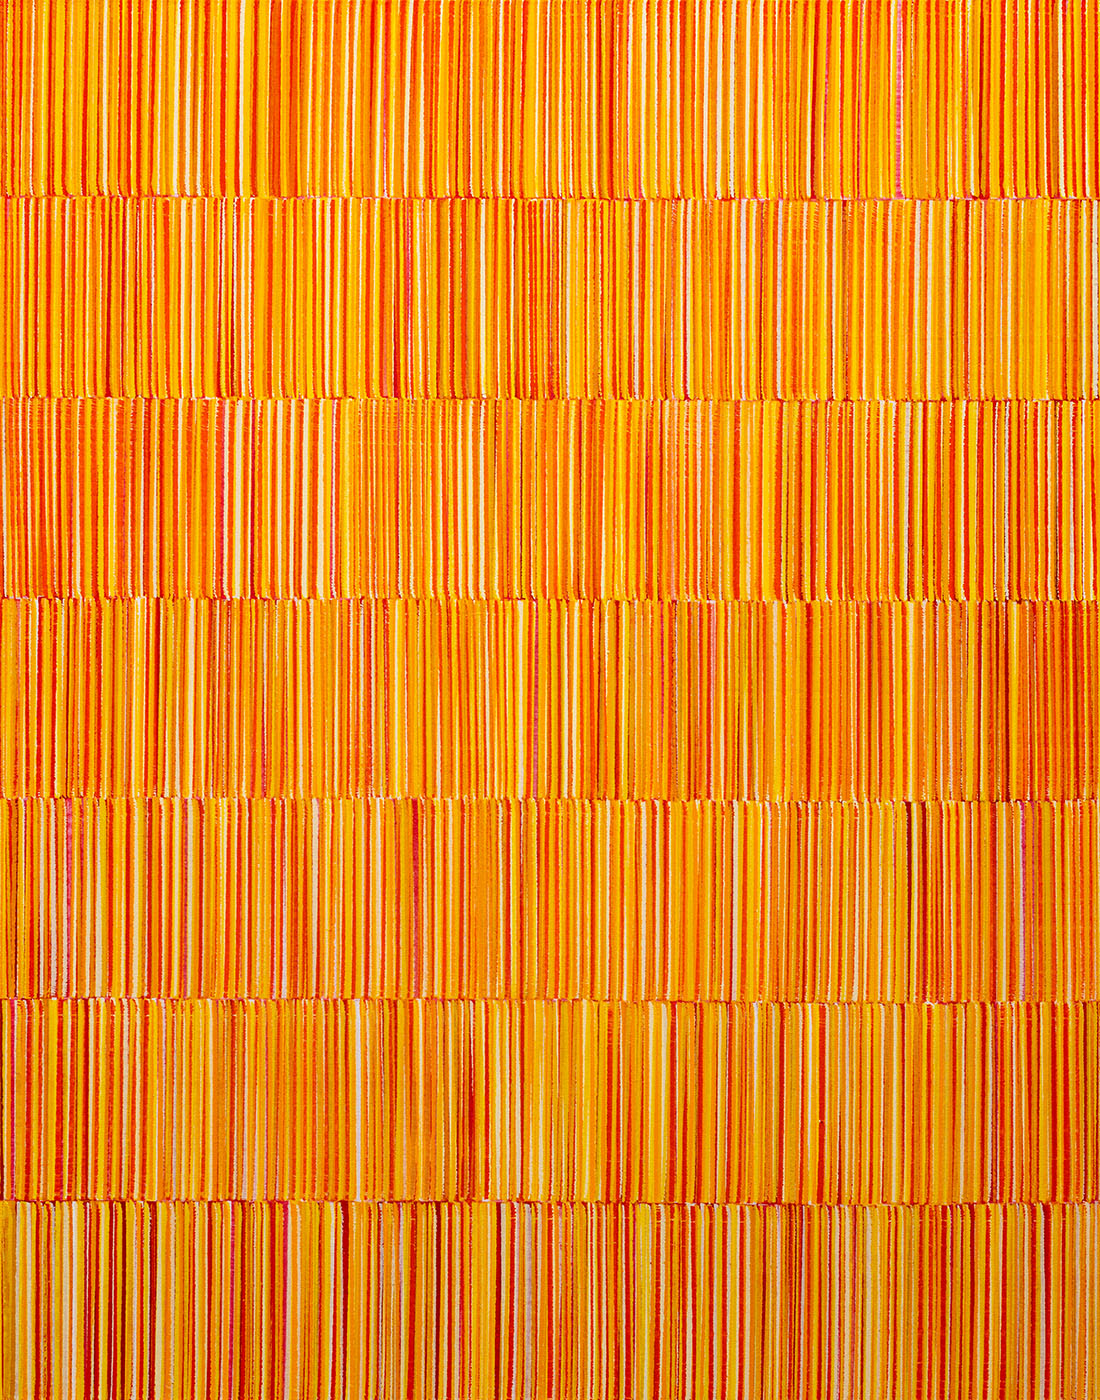 Nikola Dimitrov, Farbraum OrangeGelb I, 2019, Pigmente, Bindemittel auf Leinwand, 140 × 110 cm